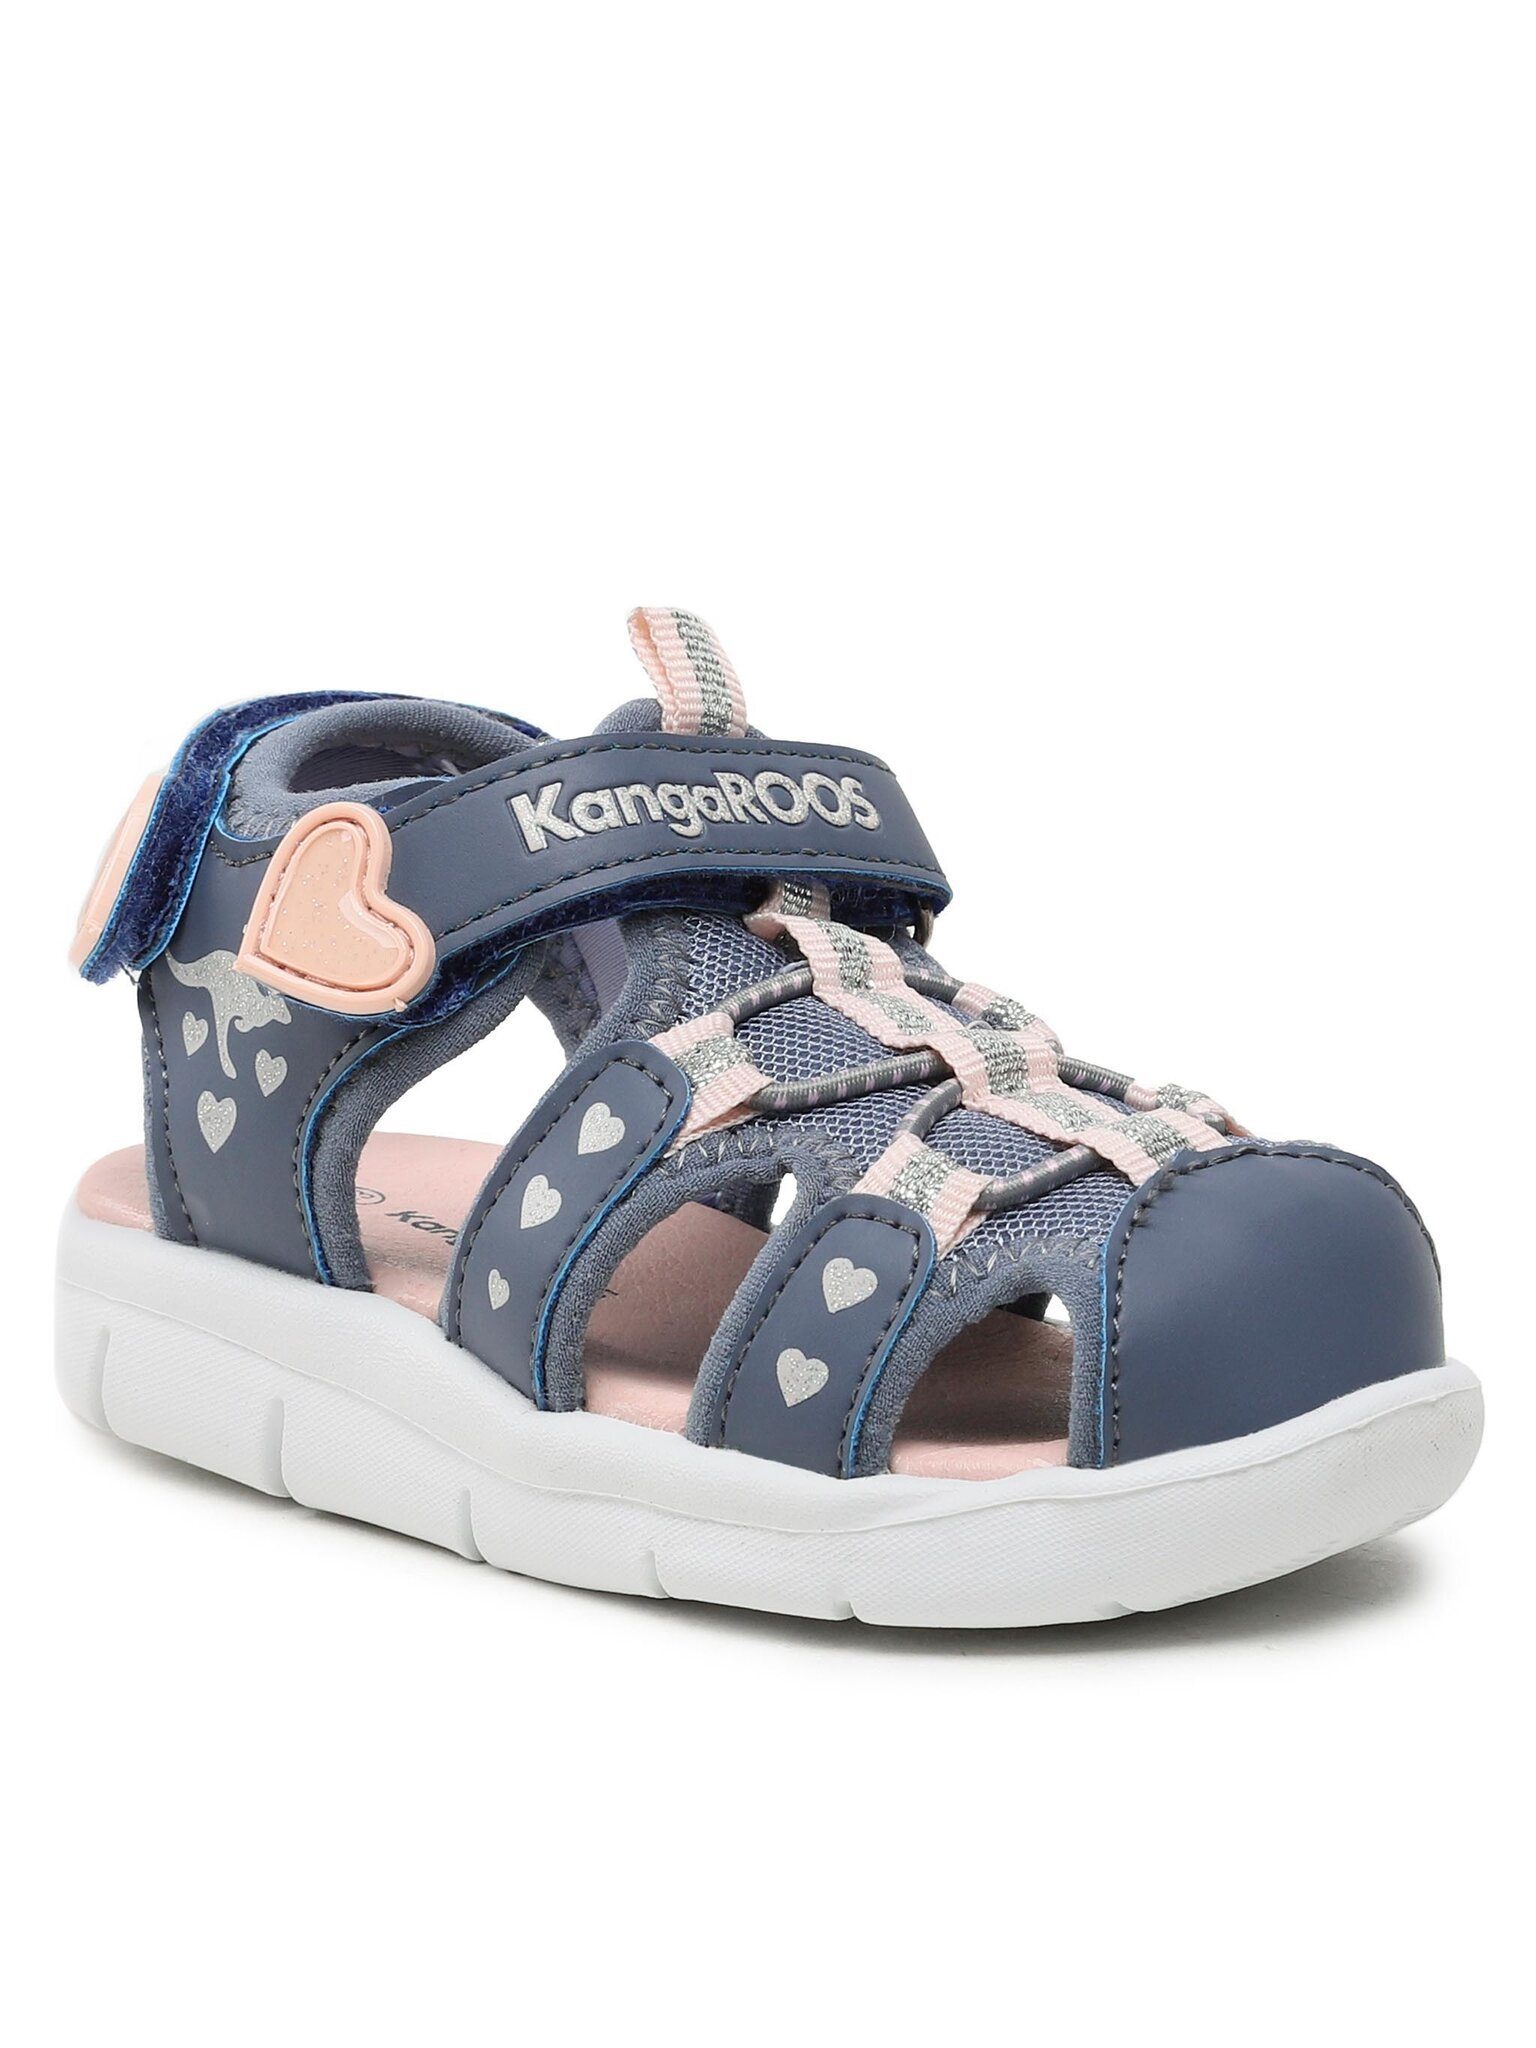 KangaROOS Sandalen K-Mini 02035 000 4376 Grisaille/Frost Pink Sandale